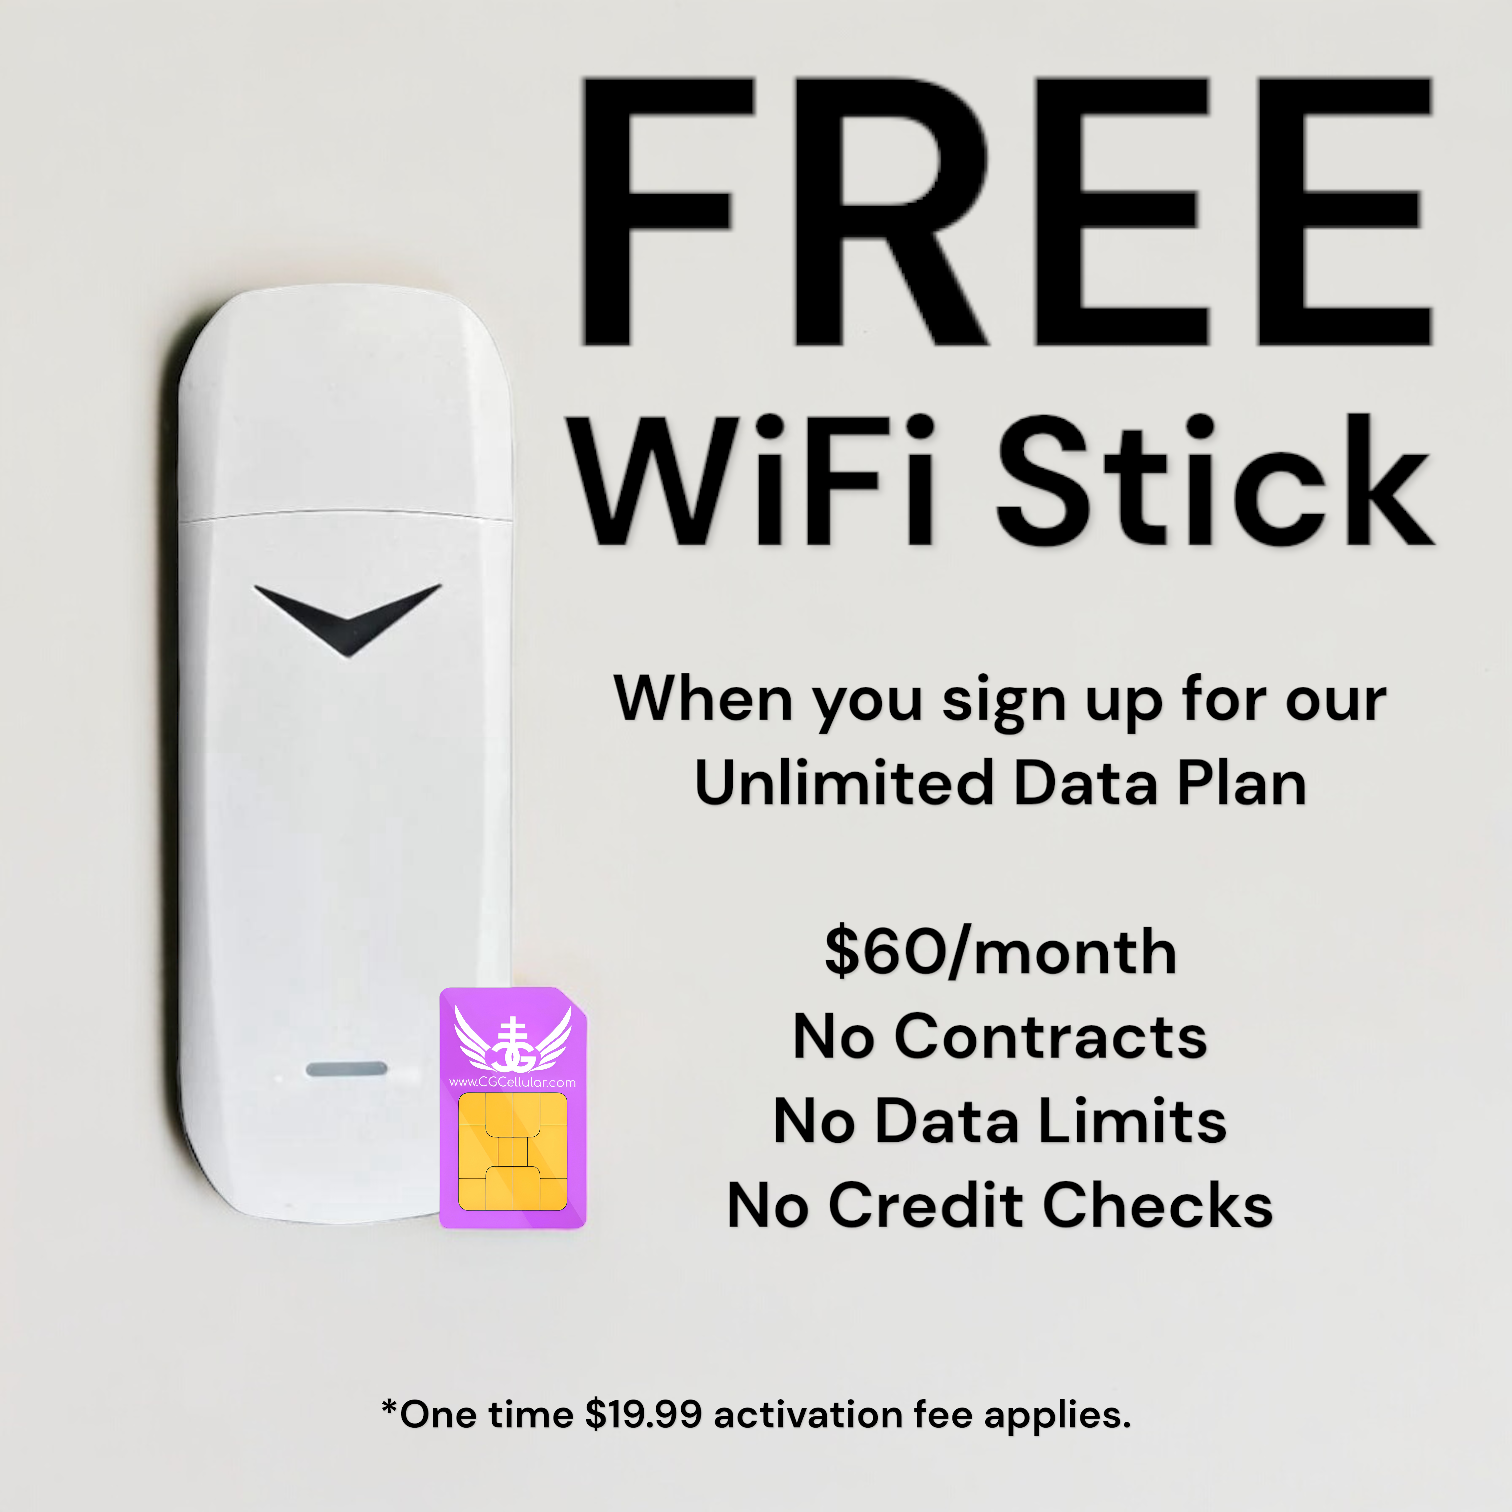 Unlimited Data + FREE WiFi Stick